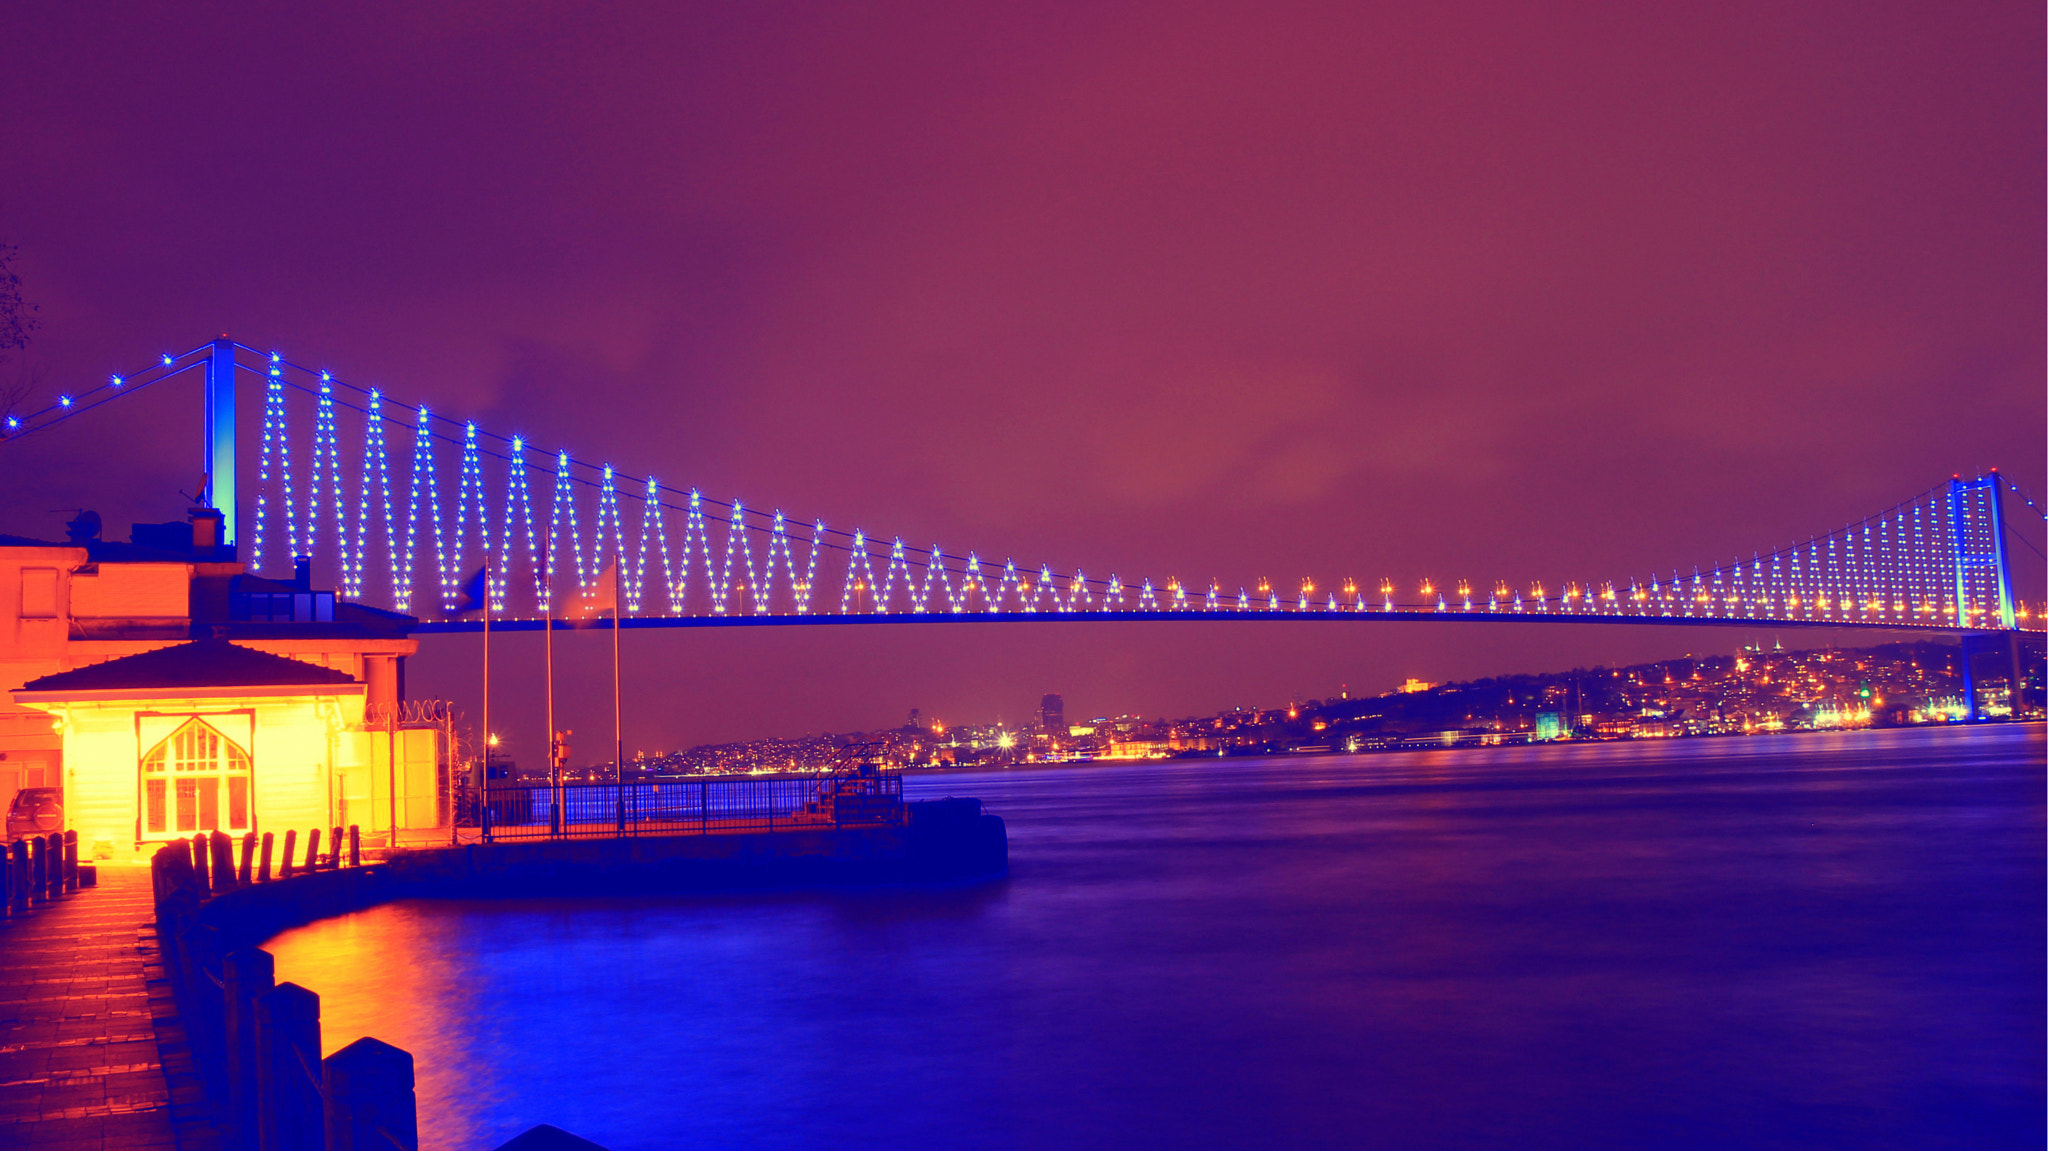 The Bridge in ISTANBUL